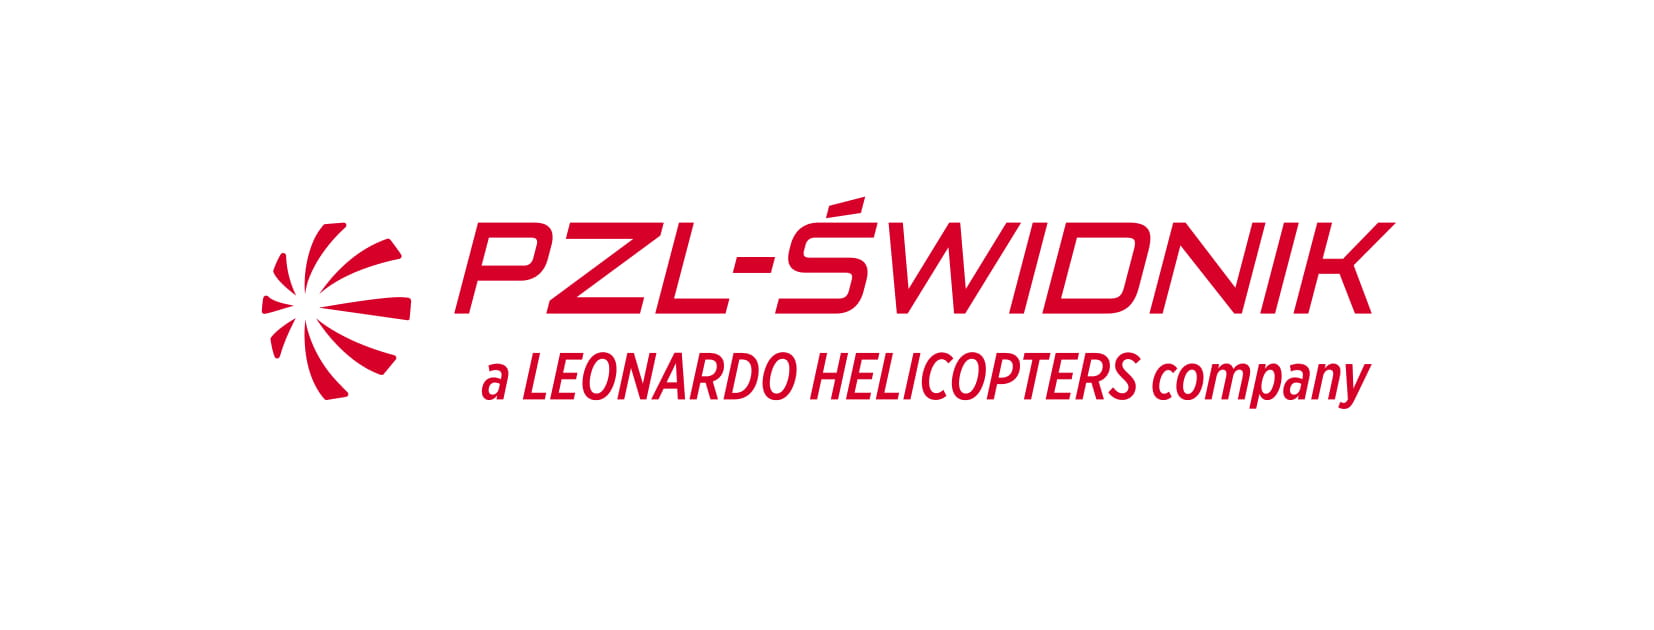 PZL-Świdnik è diventato Sponsor della conferenza “Doing business together”  : Polska Włoska Izba Gospodarcza